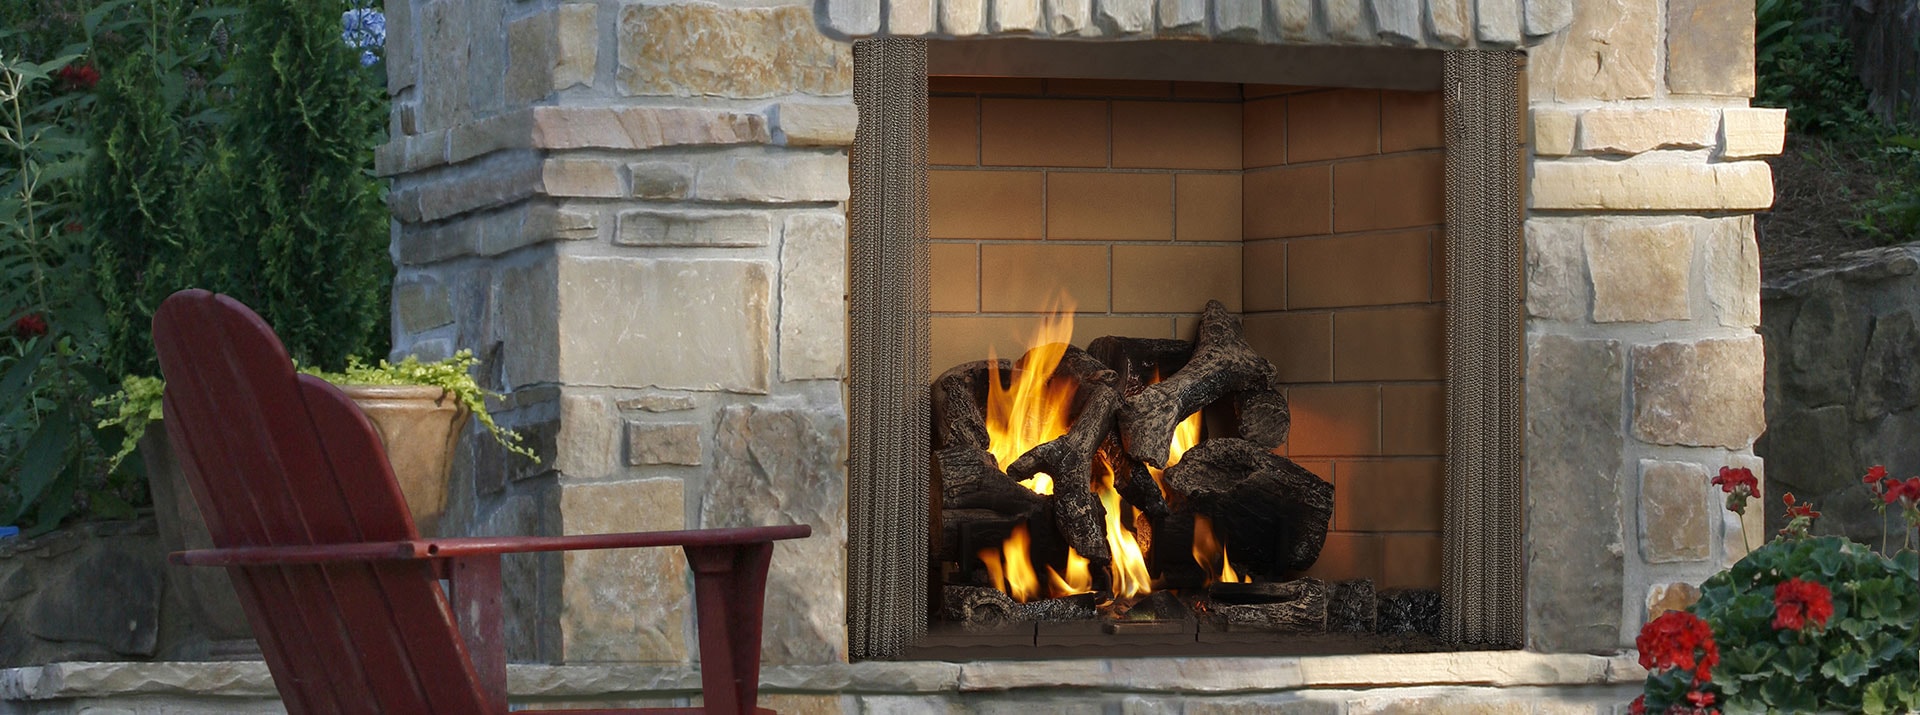 Preway Fireplace Fresh Outdoor Fireplaces Wood Burning